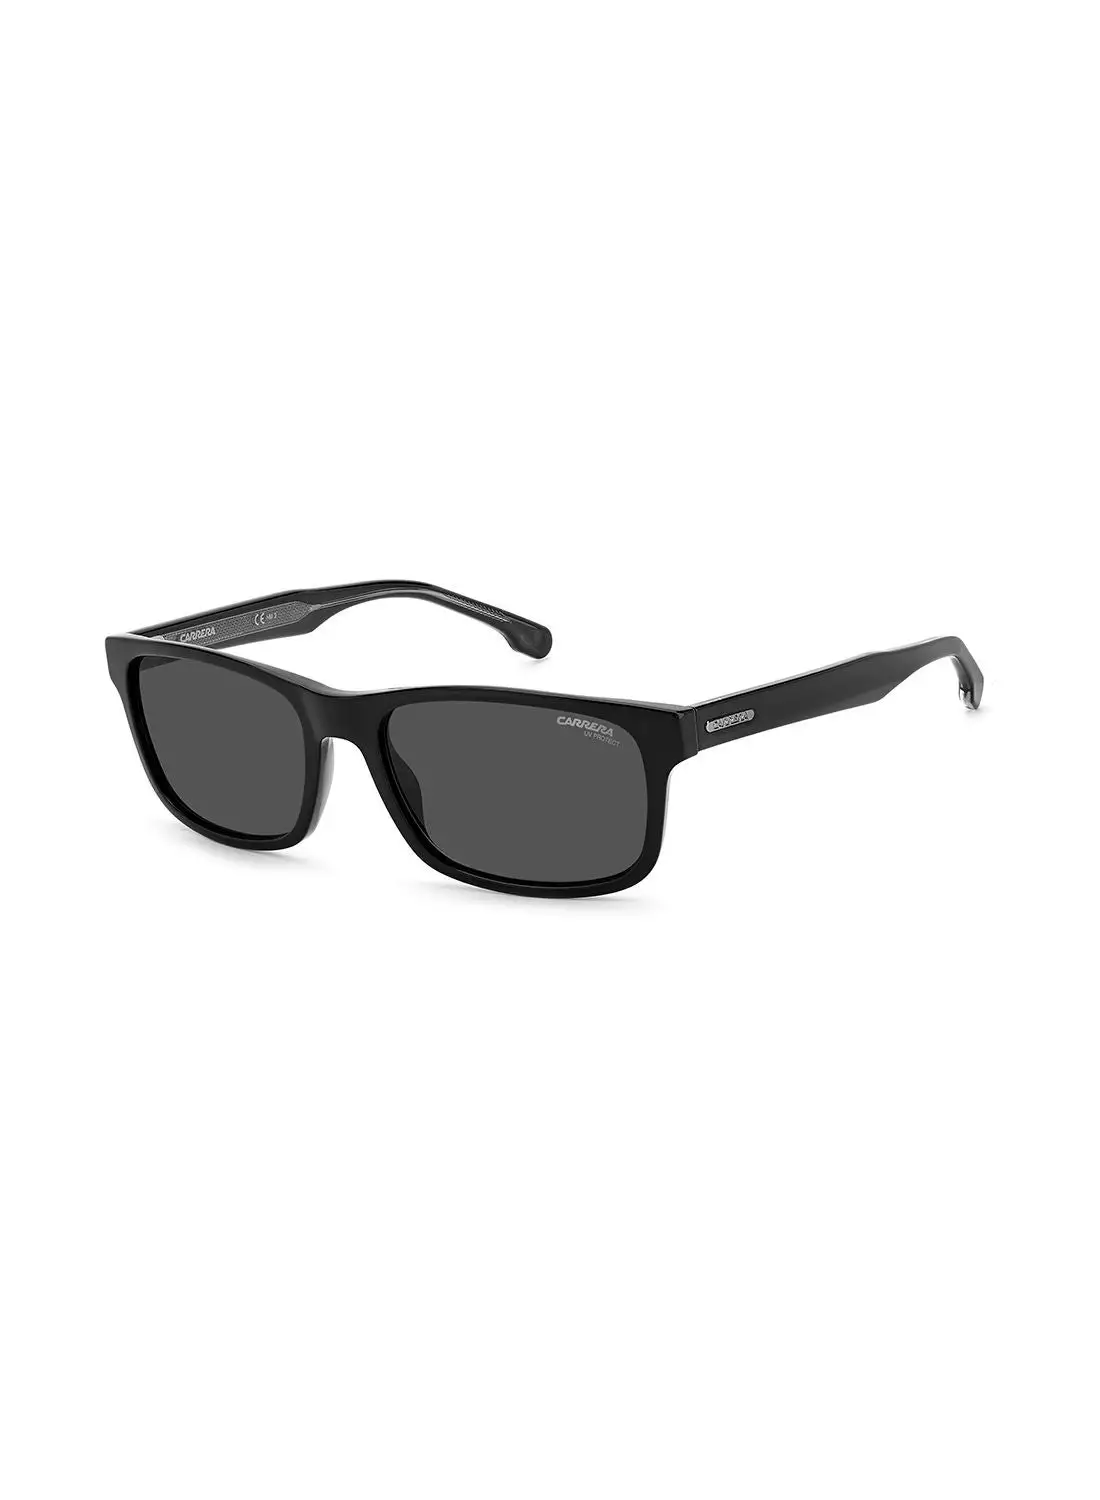 Carrera Men's UV Protection Rectangular Sunglasses - Carrera 299/S Black 57 - Lens Size: 57 Mm